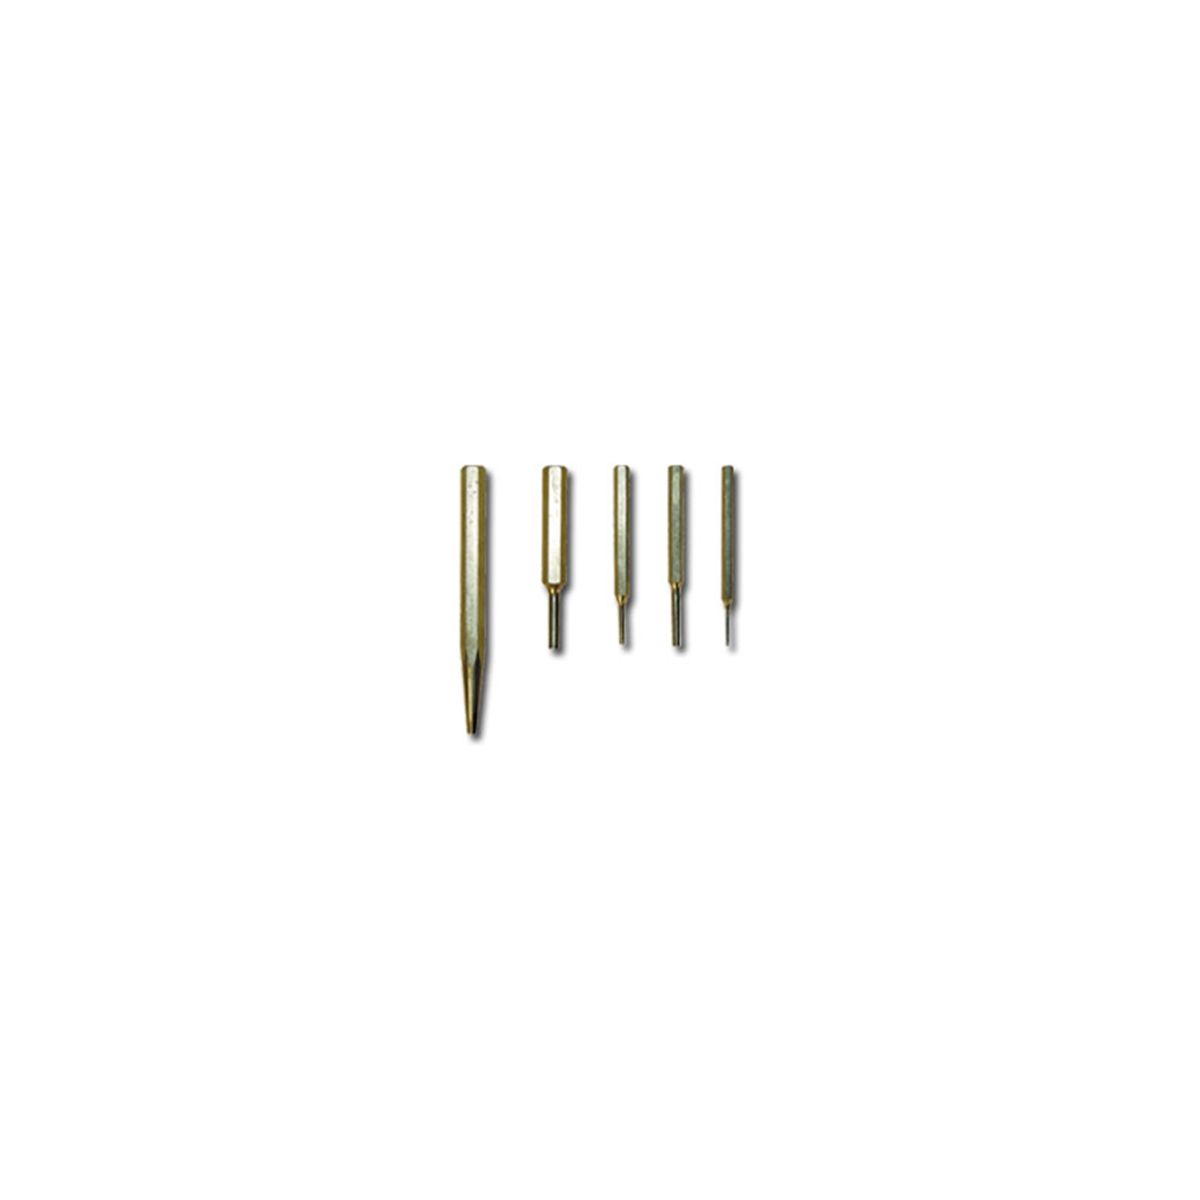 4 Piece Brass Pin Punch Set